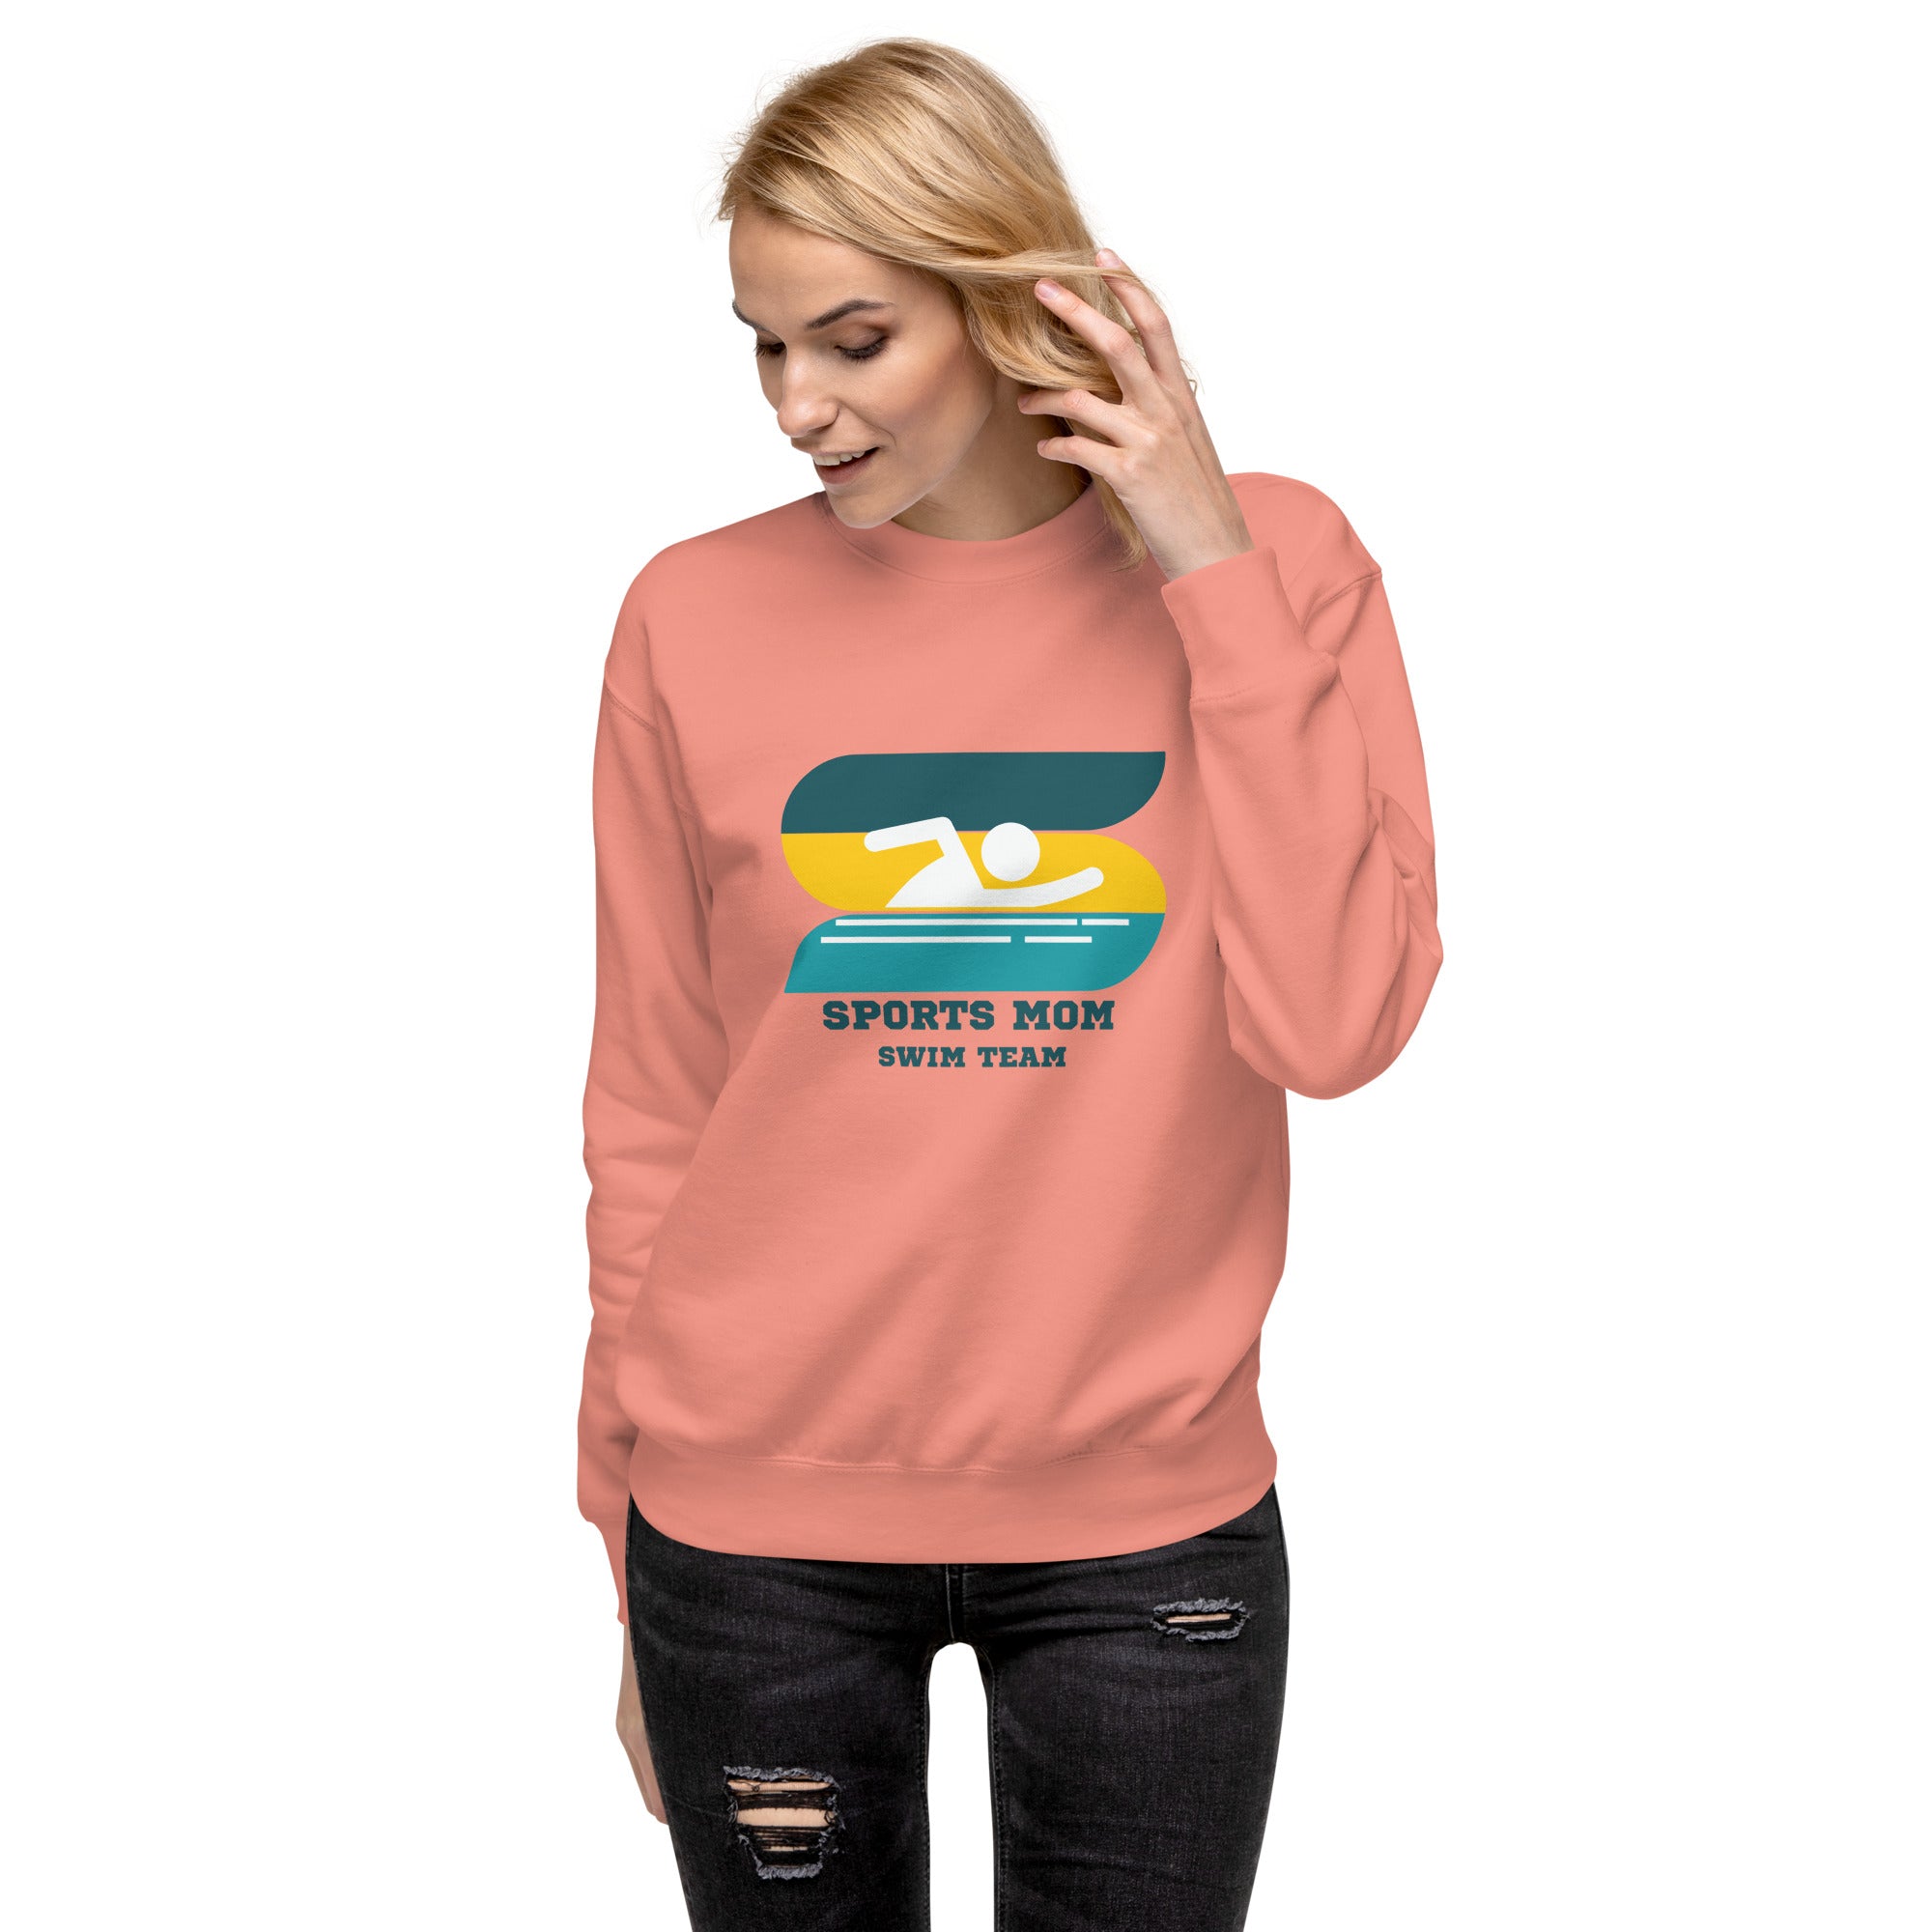 The Original Sports Mom Swim Team Women's Premium Sweatshirt